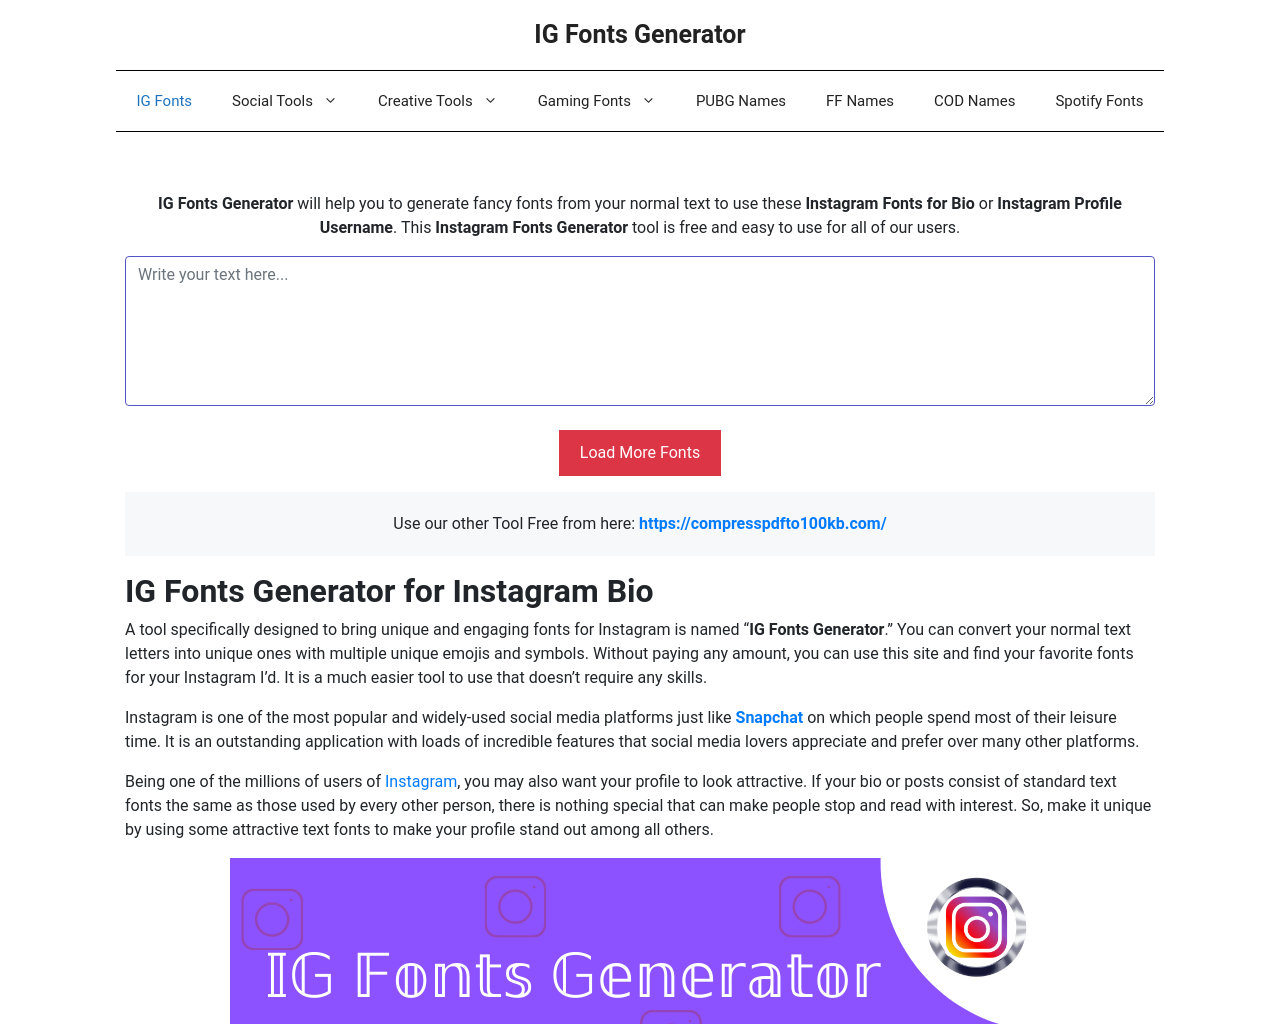 igfontsgenerator.com